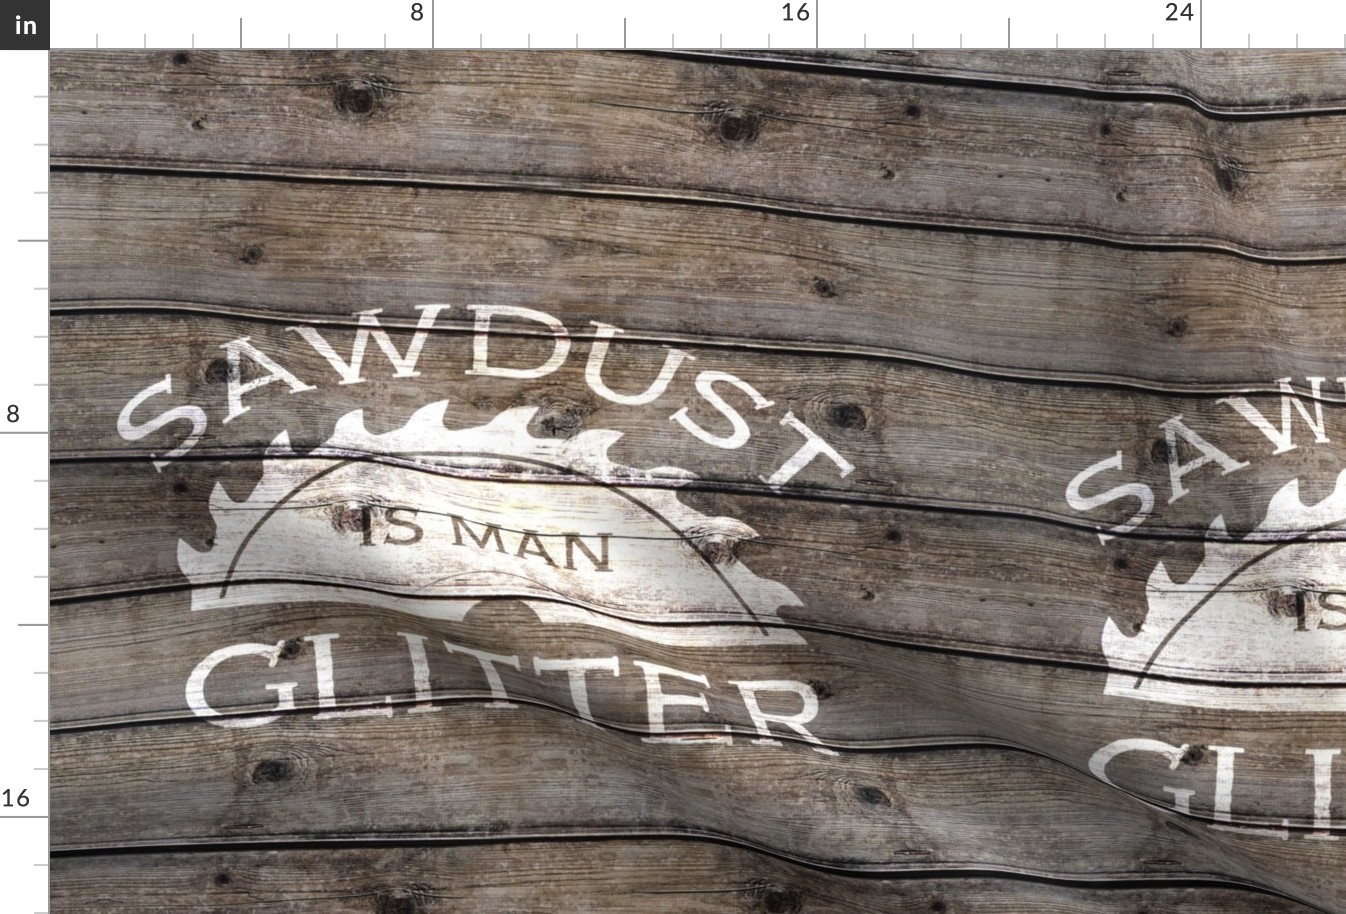 Sawdust is Man Glitter on barn wood 18 inch square